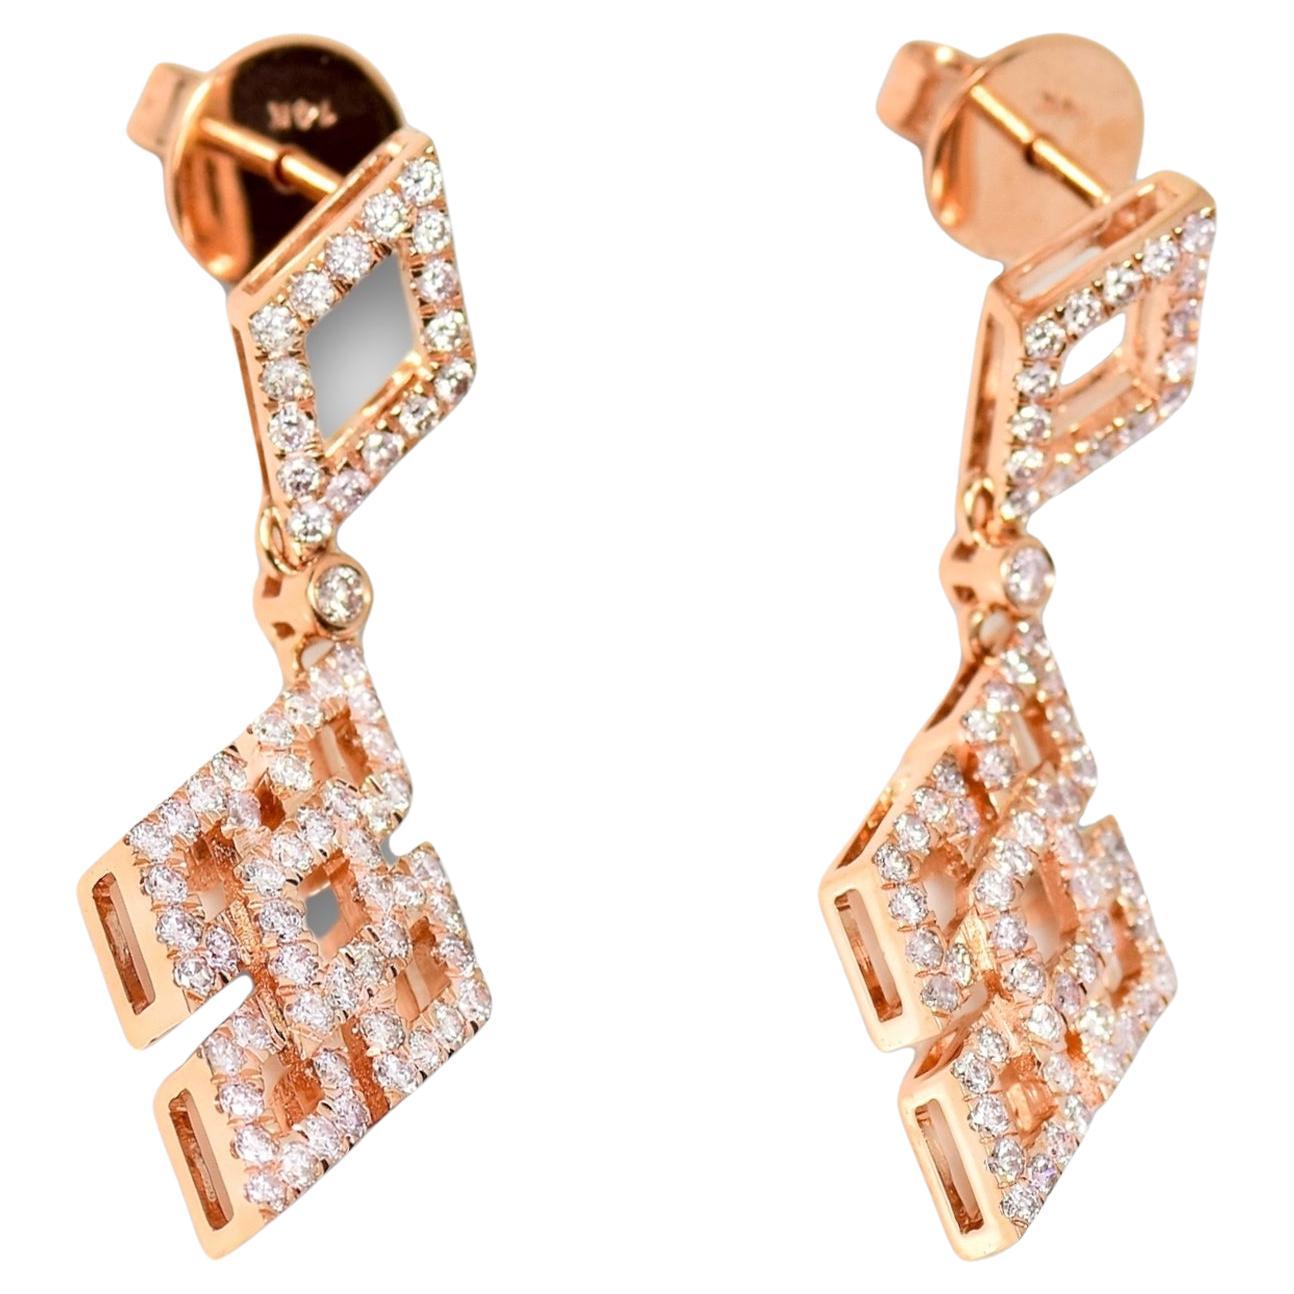 IGI 14K 0.95 ct Natural Pink Diamonds Art Deco Design Stud Earrings For Sale